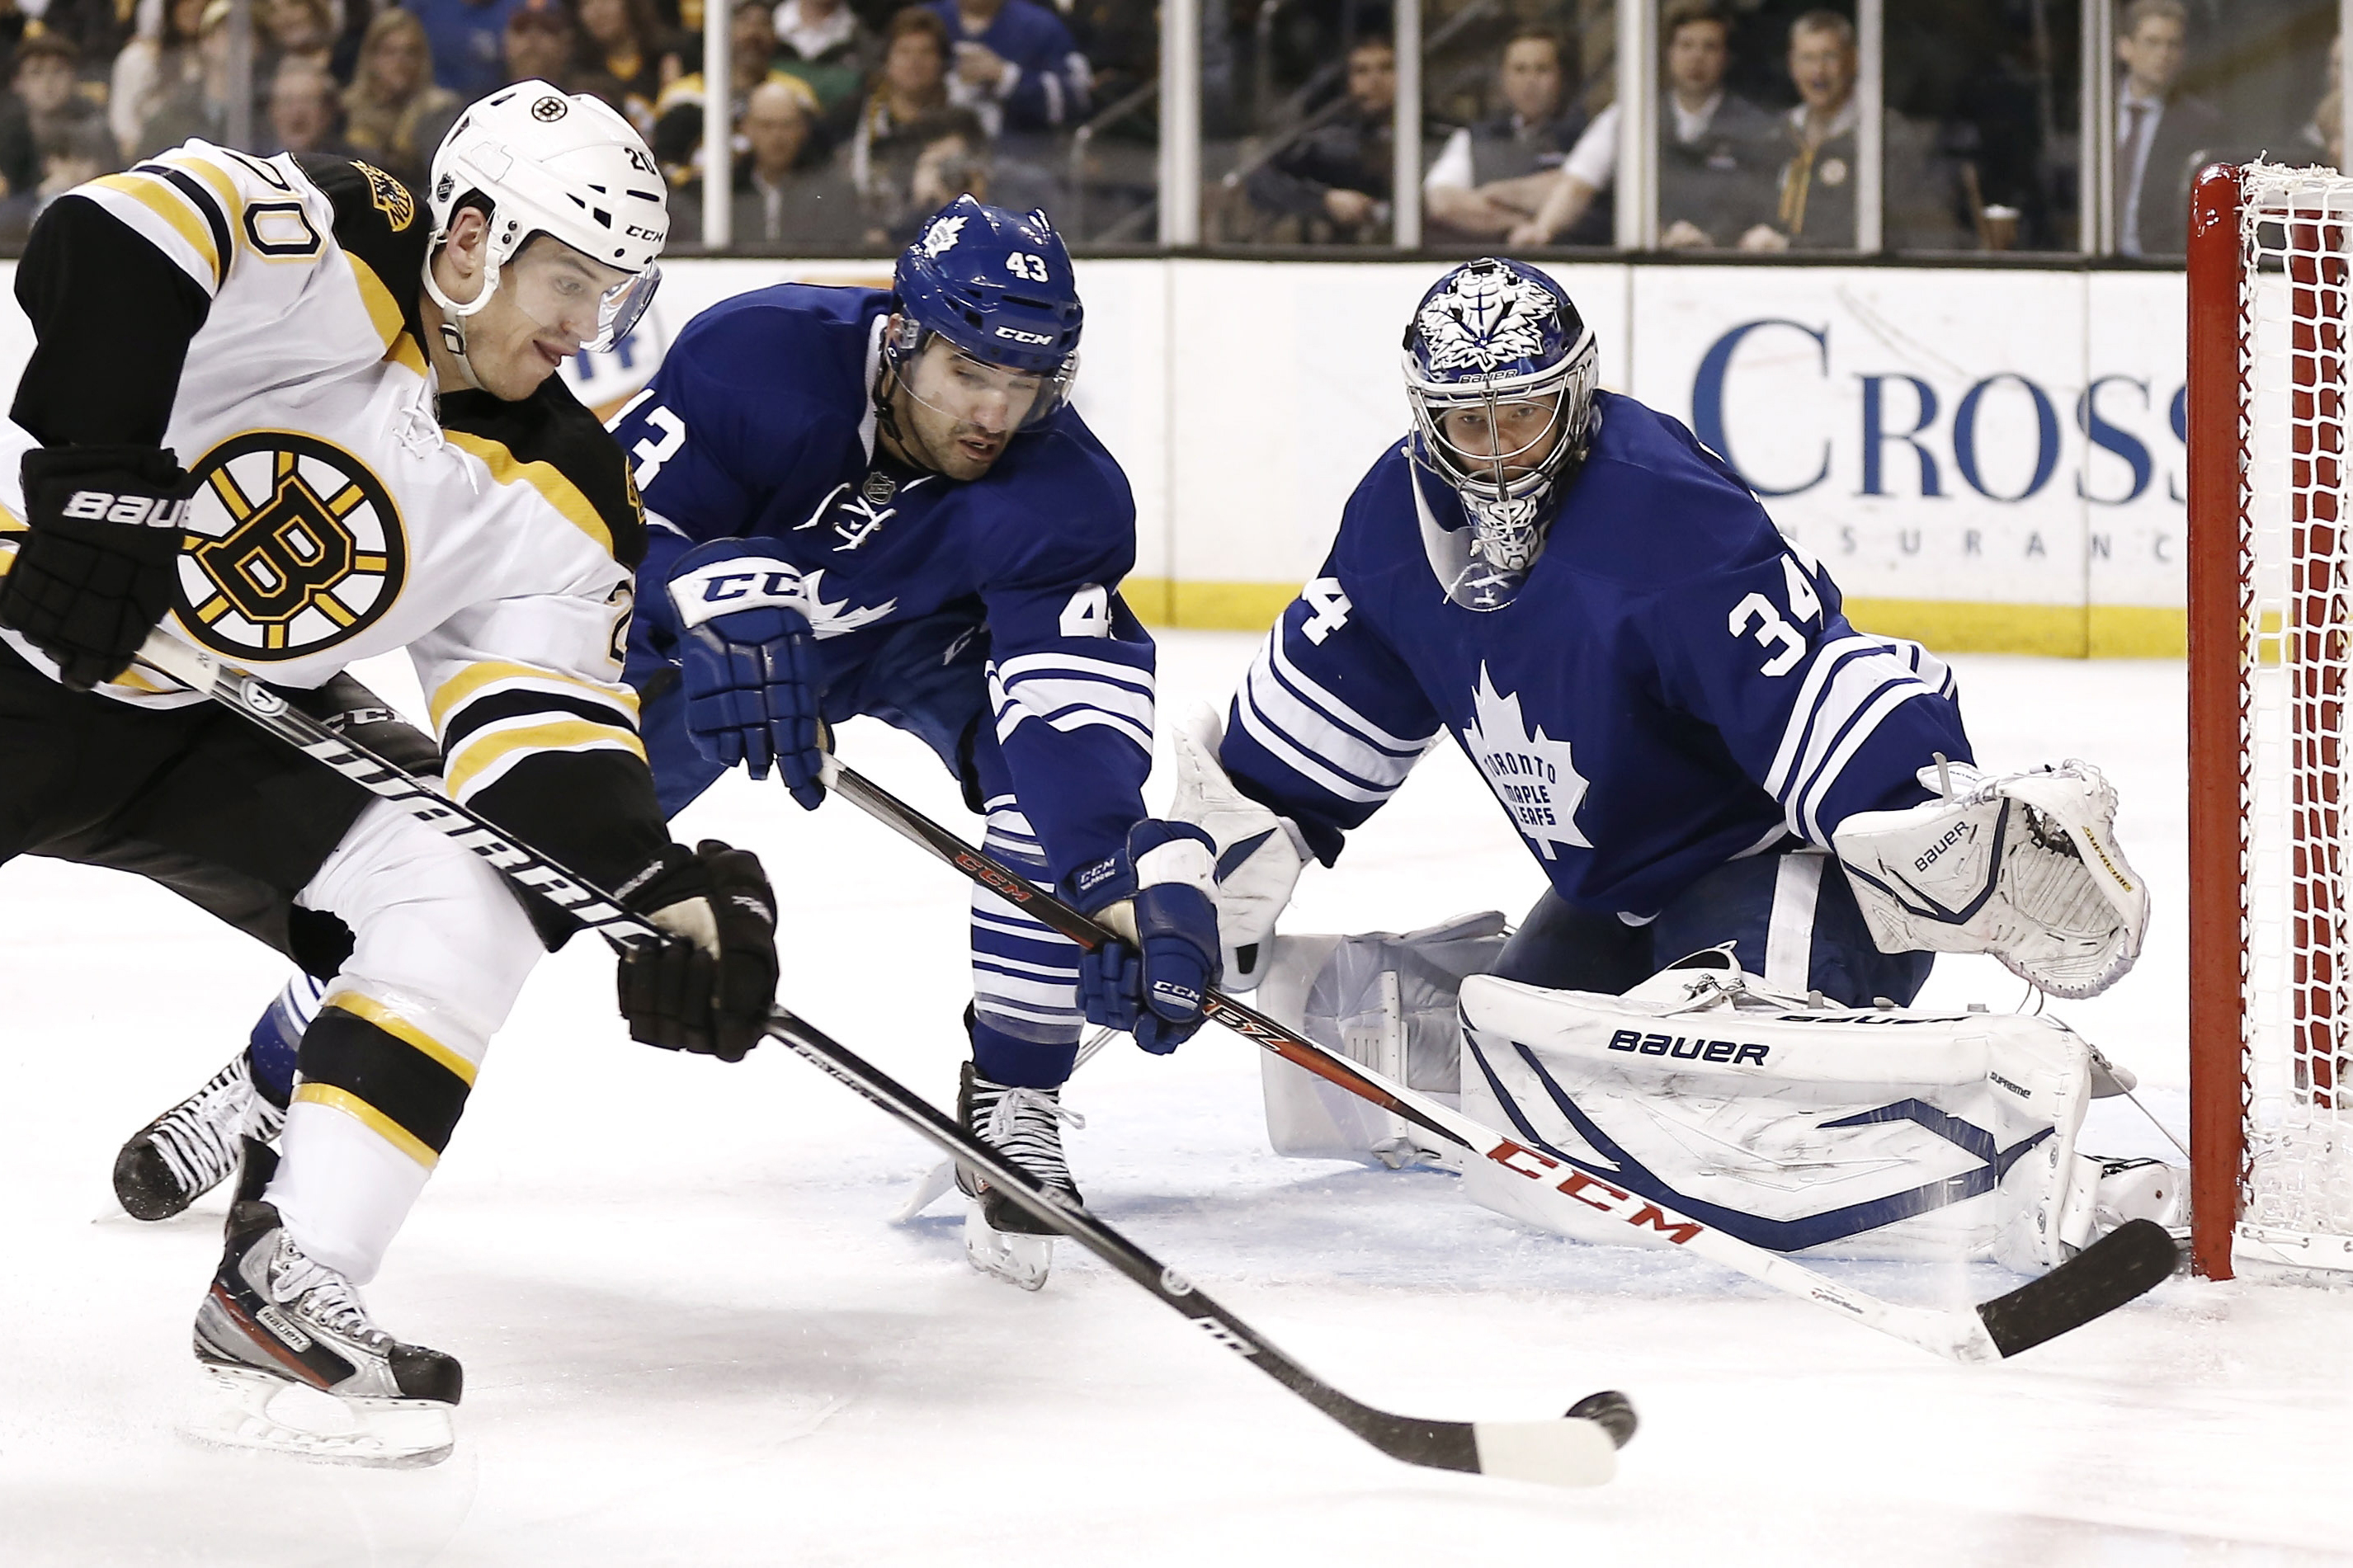 Leafs vs. Bruins playoff series starts Wednesday CityNews Toronto